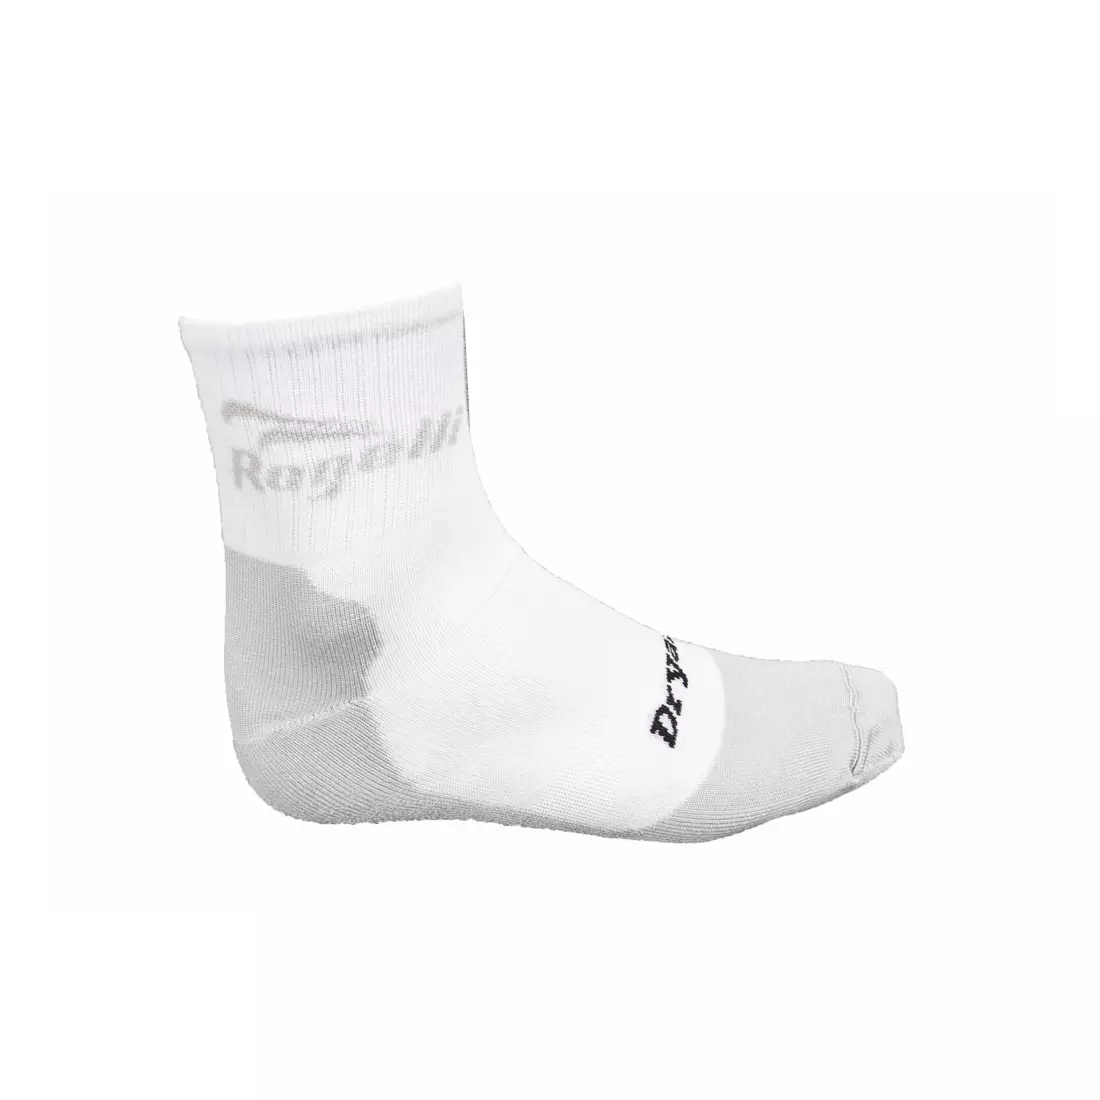 ROGELLI RRS-03 sports socks, white and gray